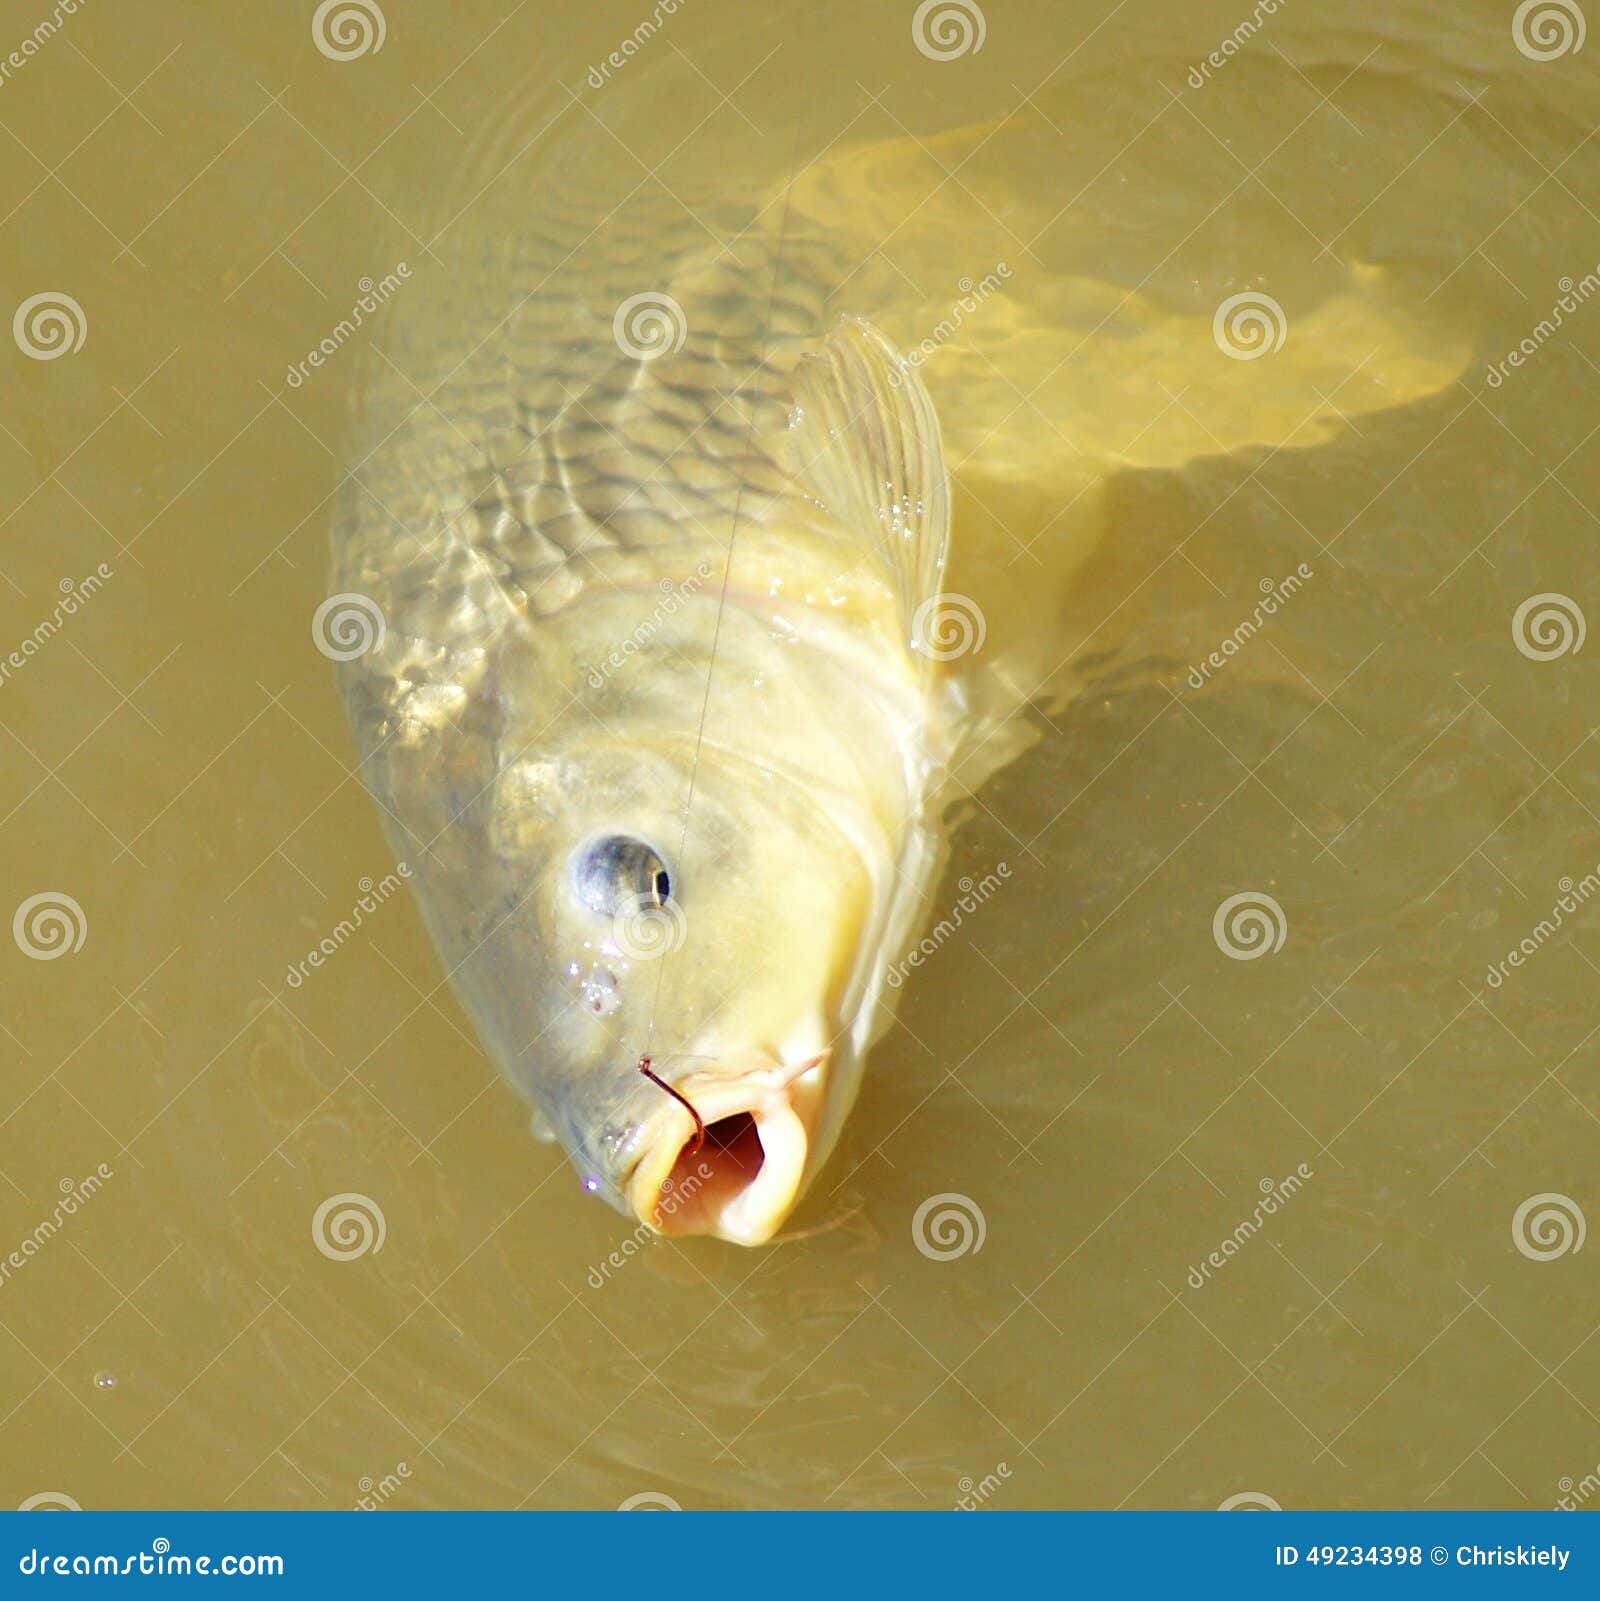 European Carp in Murray River Australia Stock Photo - Image of good,  australia: 49234398